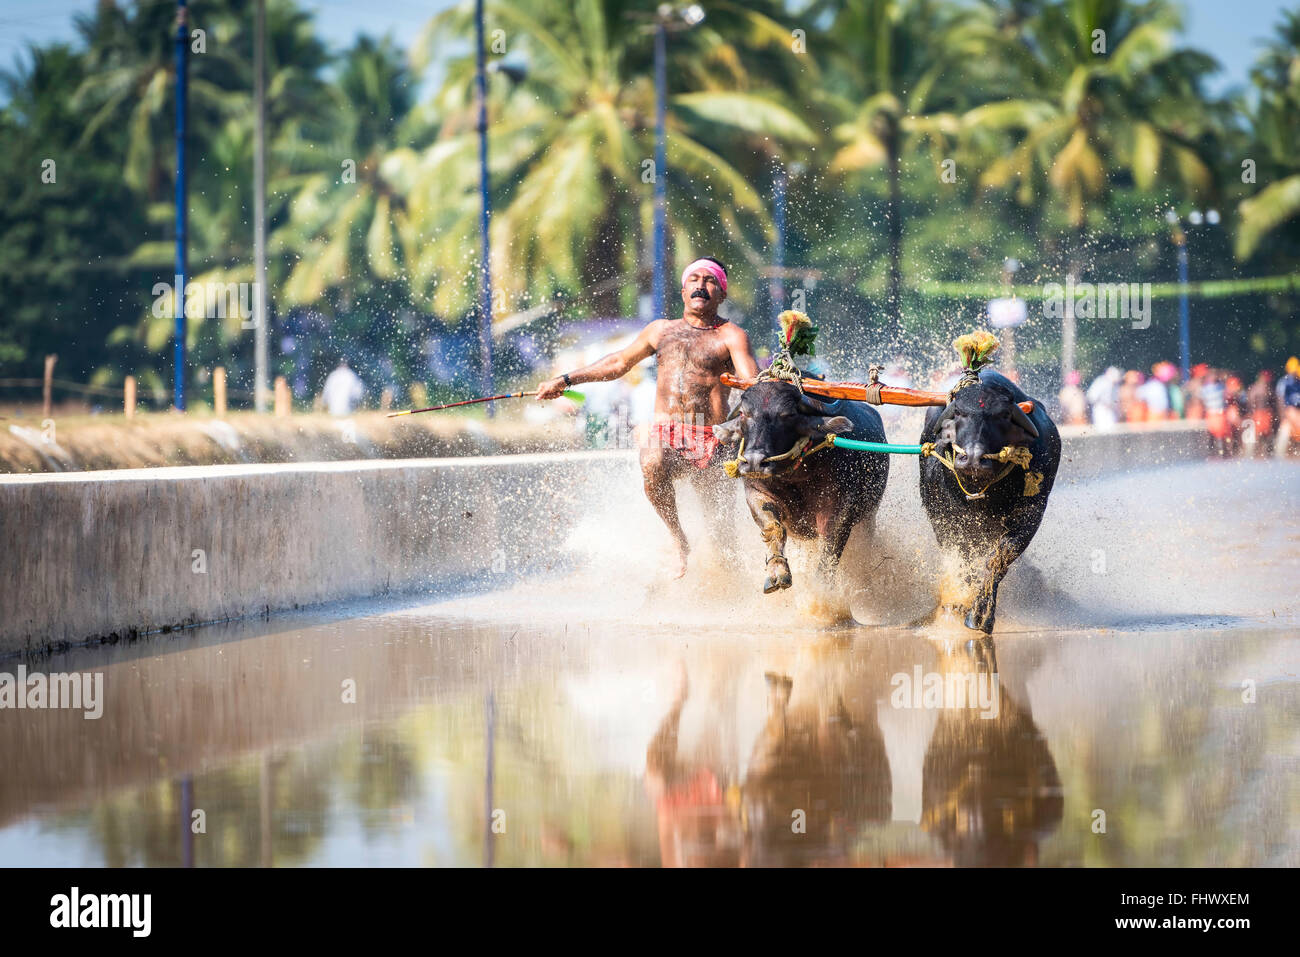 Buffalo race celebration in Western Karnataka, India Stock Photo